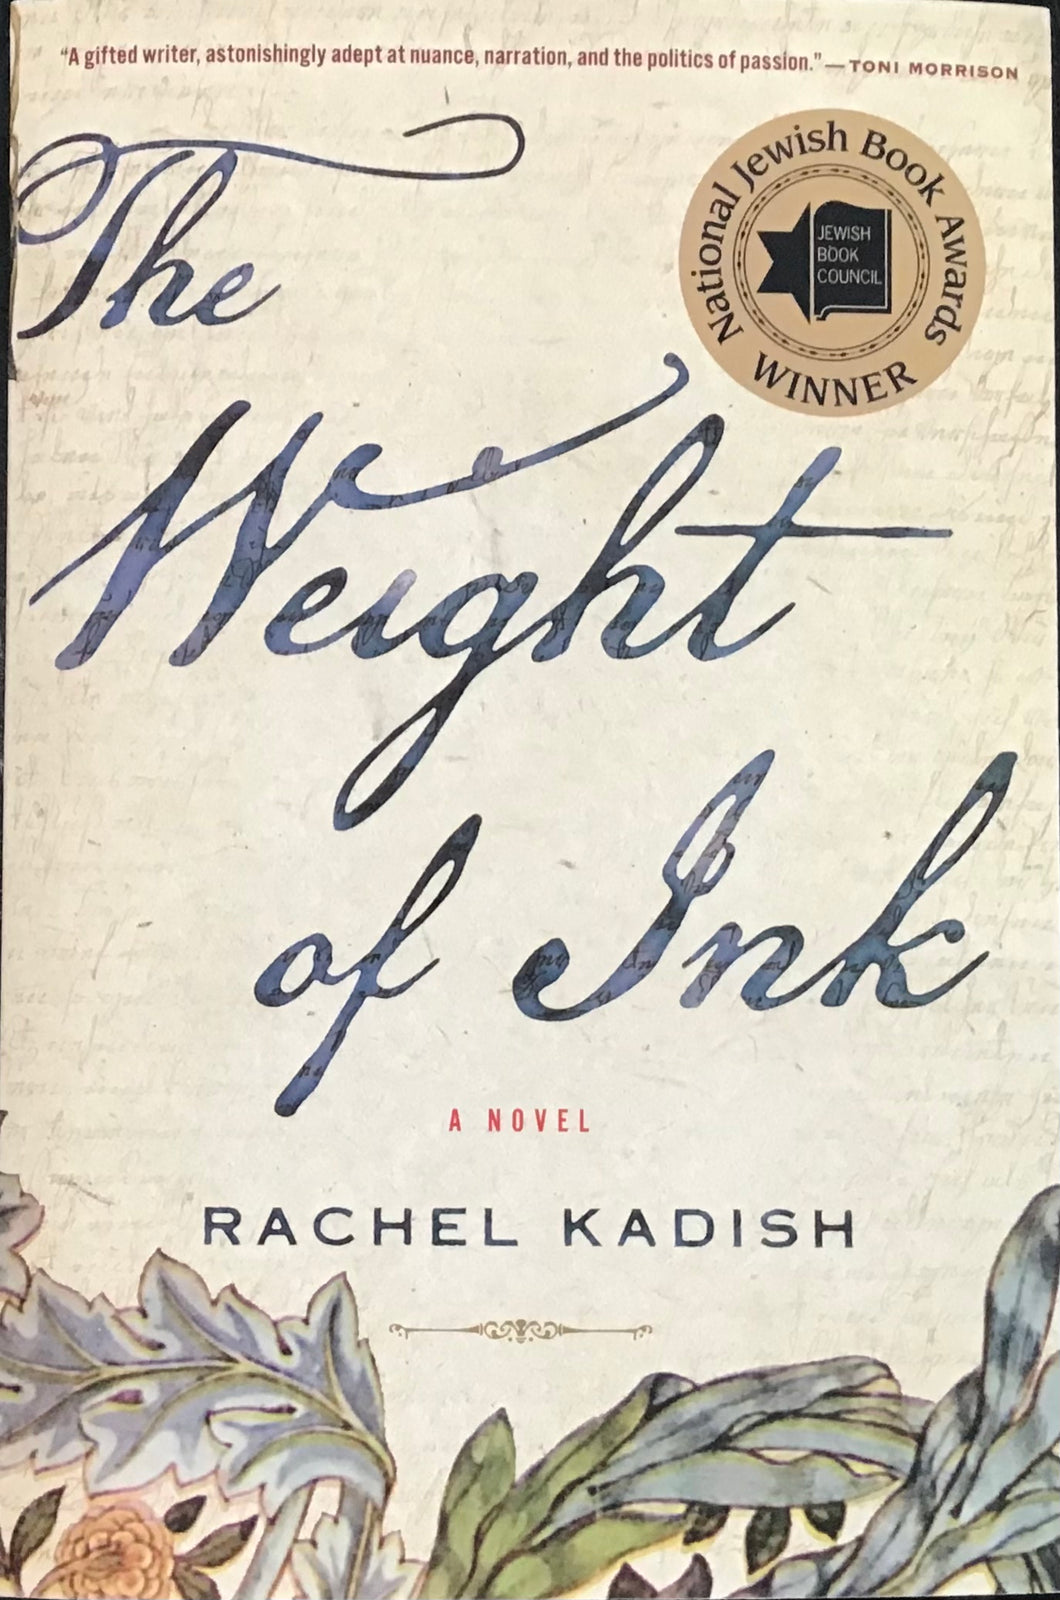 The Weight of Ink, Rachel Kadish